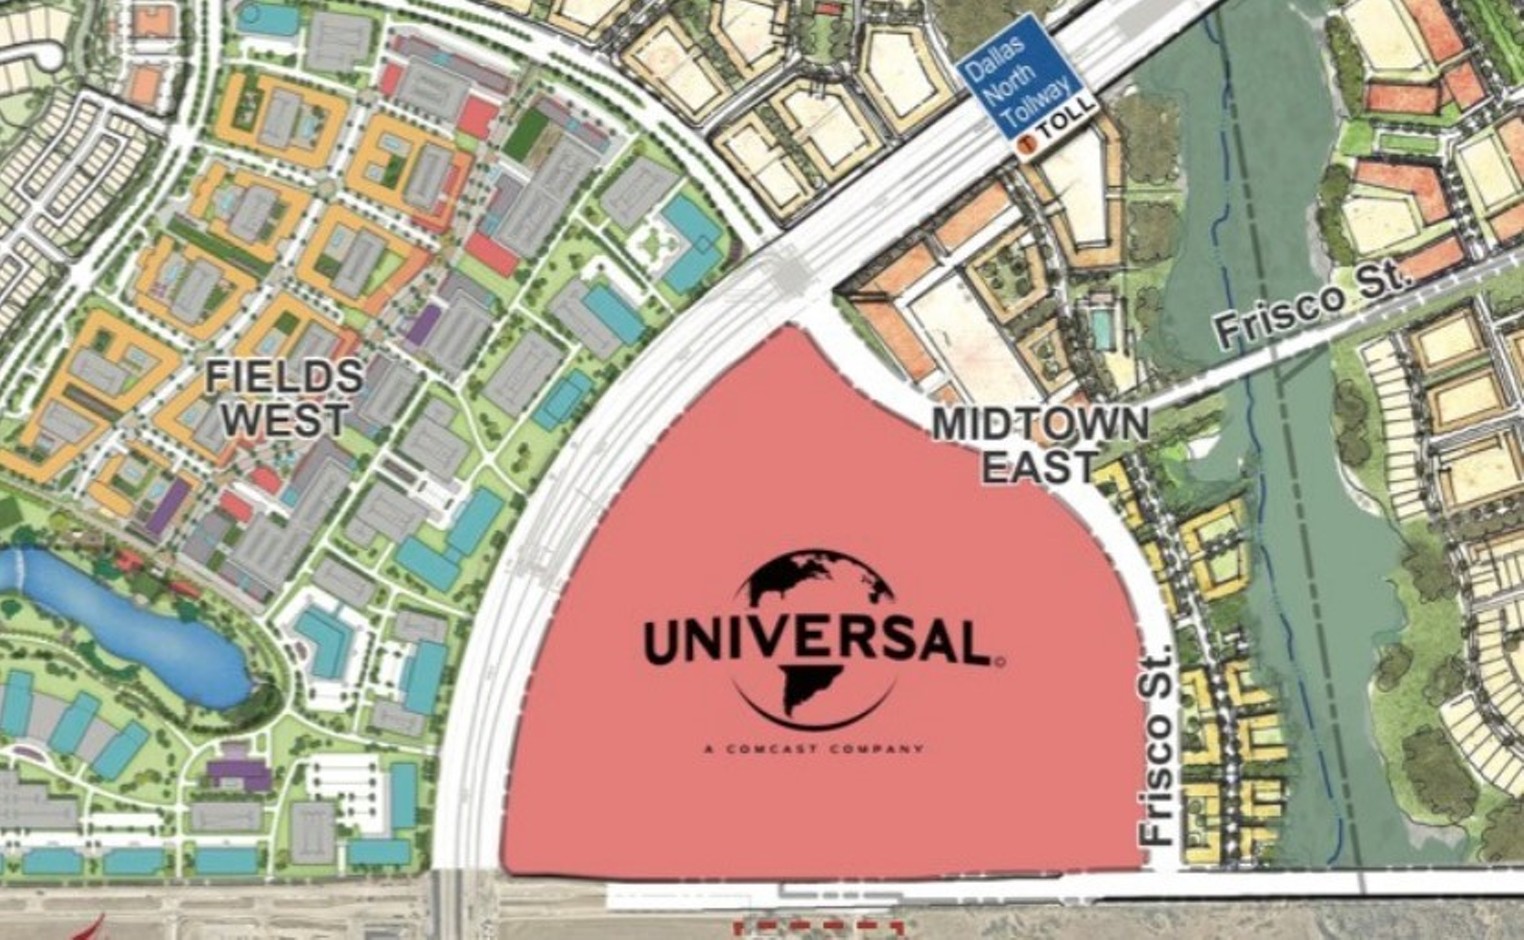 We have more details on Frisco’s Universal Studios theme park